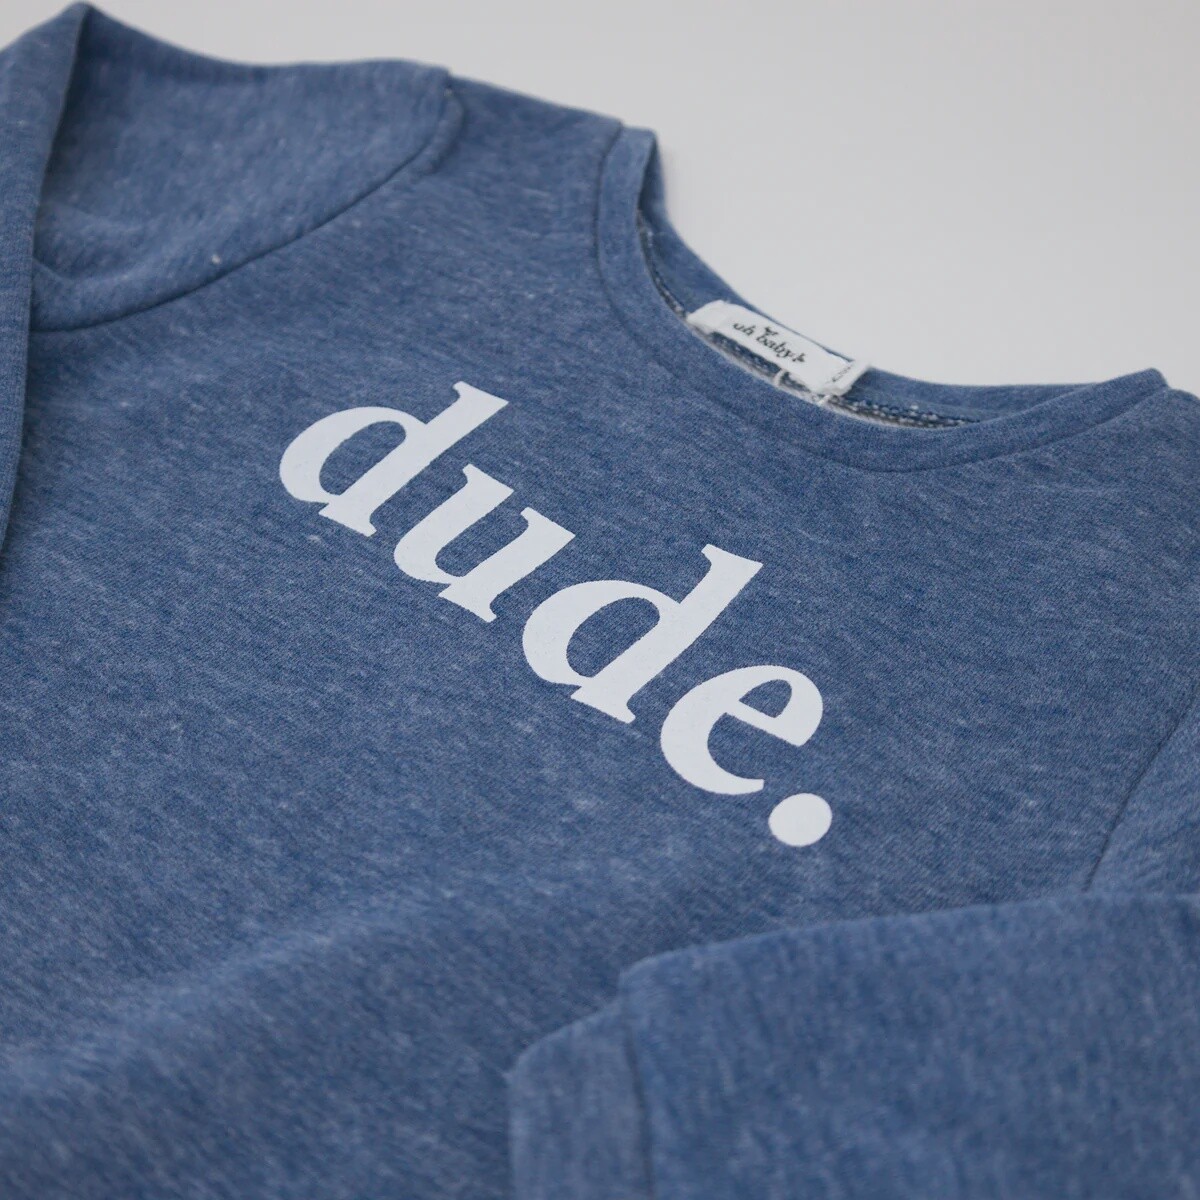 "Dude" Sweatshirt